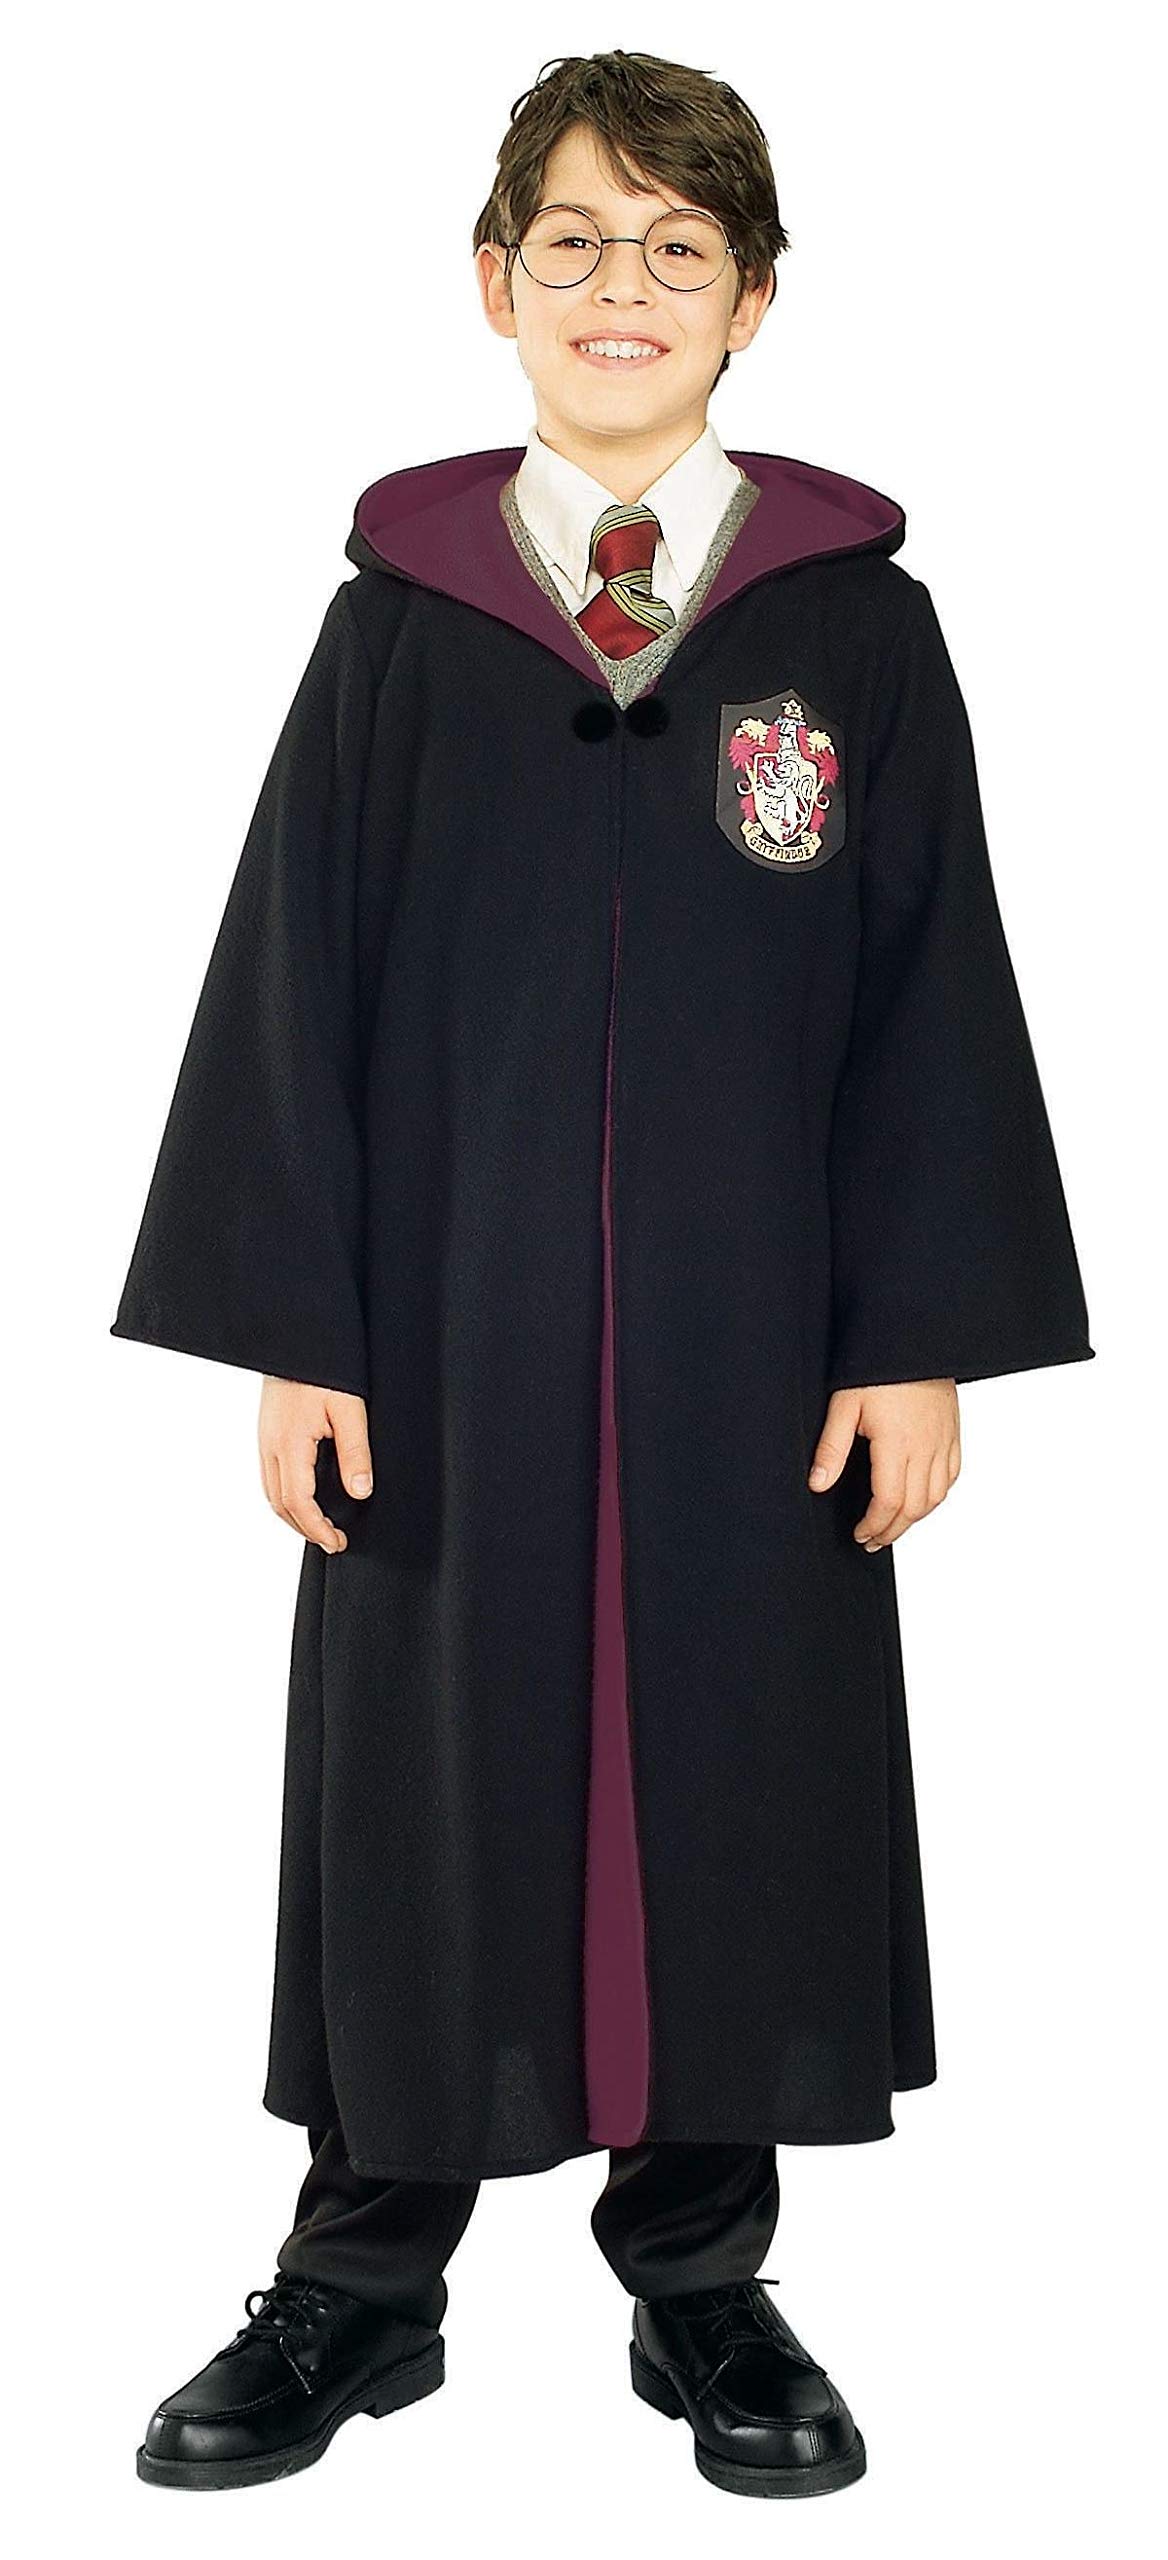 Rubie's Deluxe Harry Potter Costume